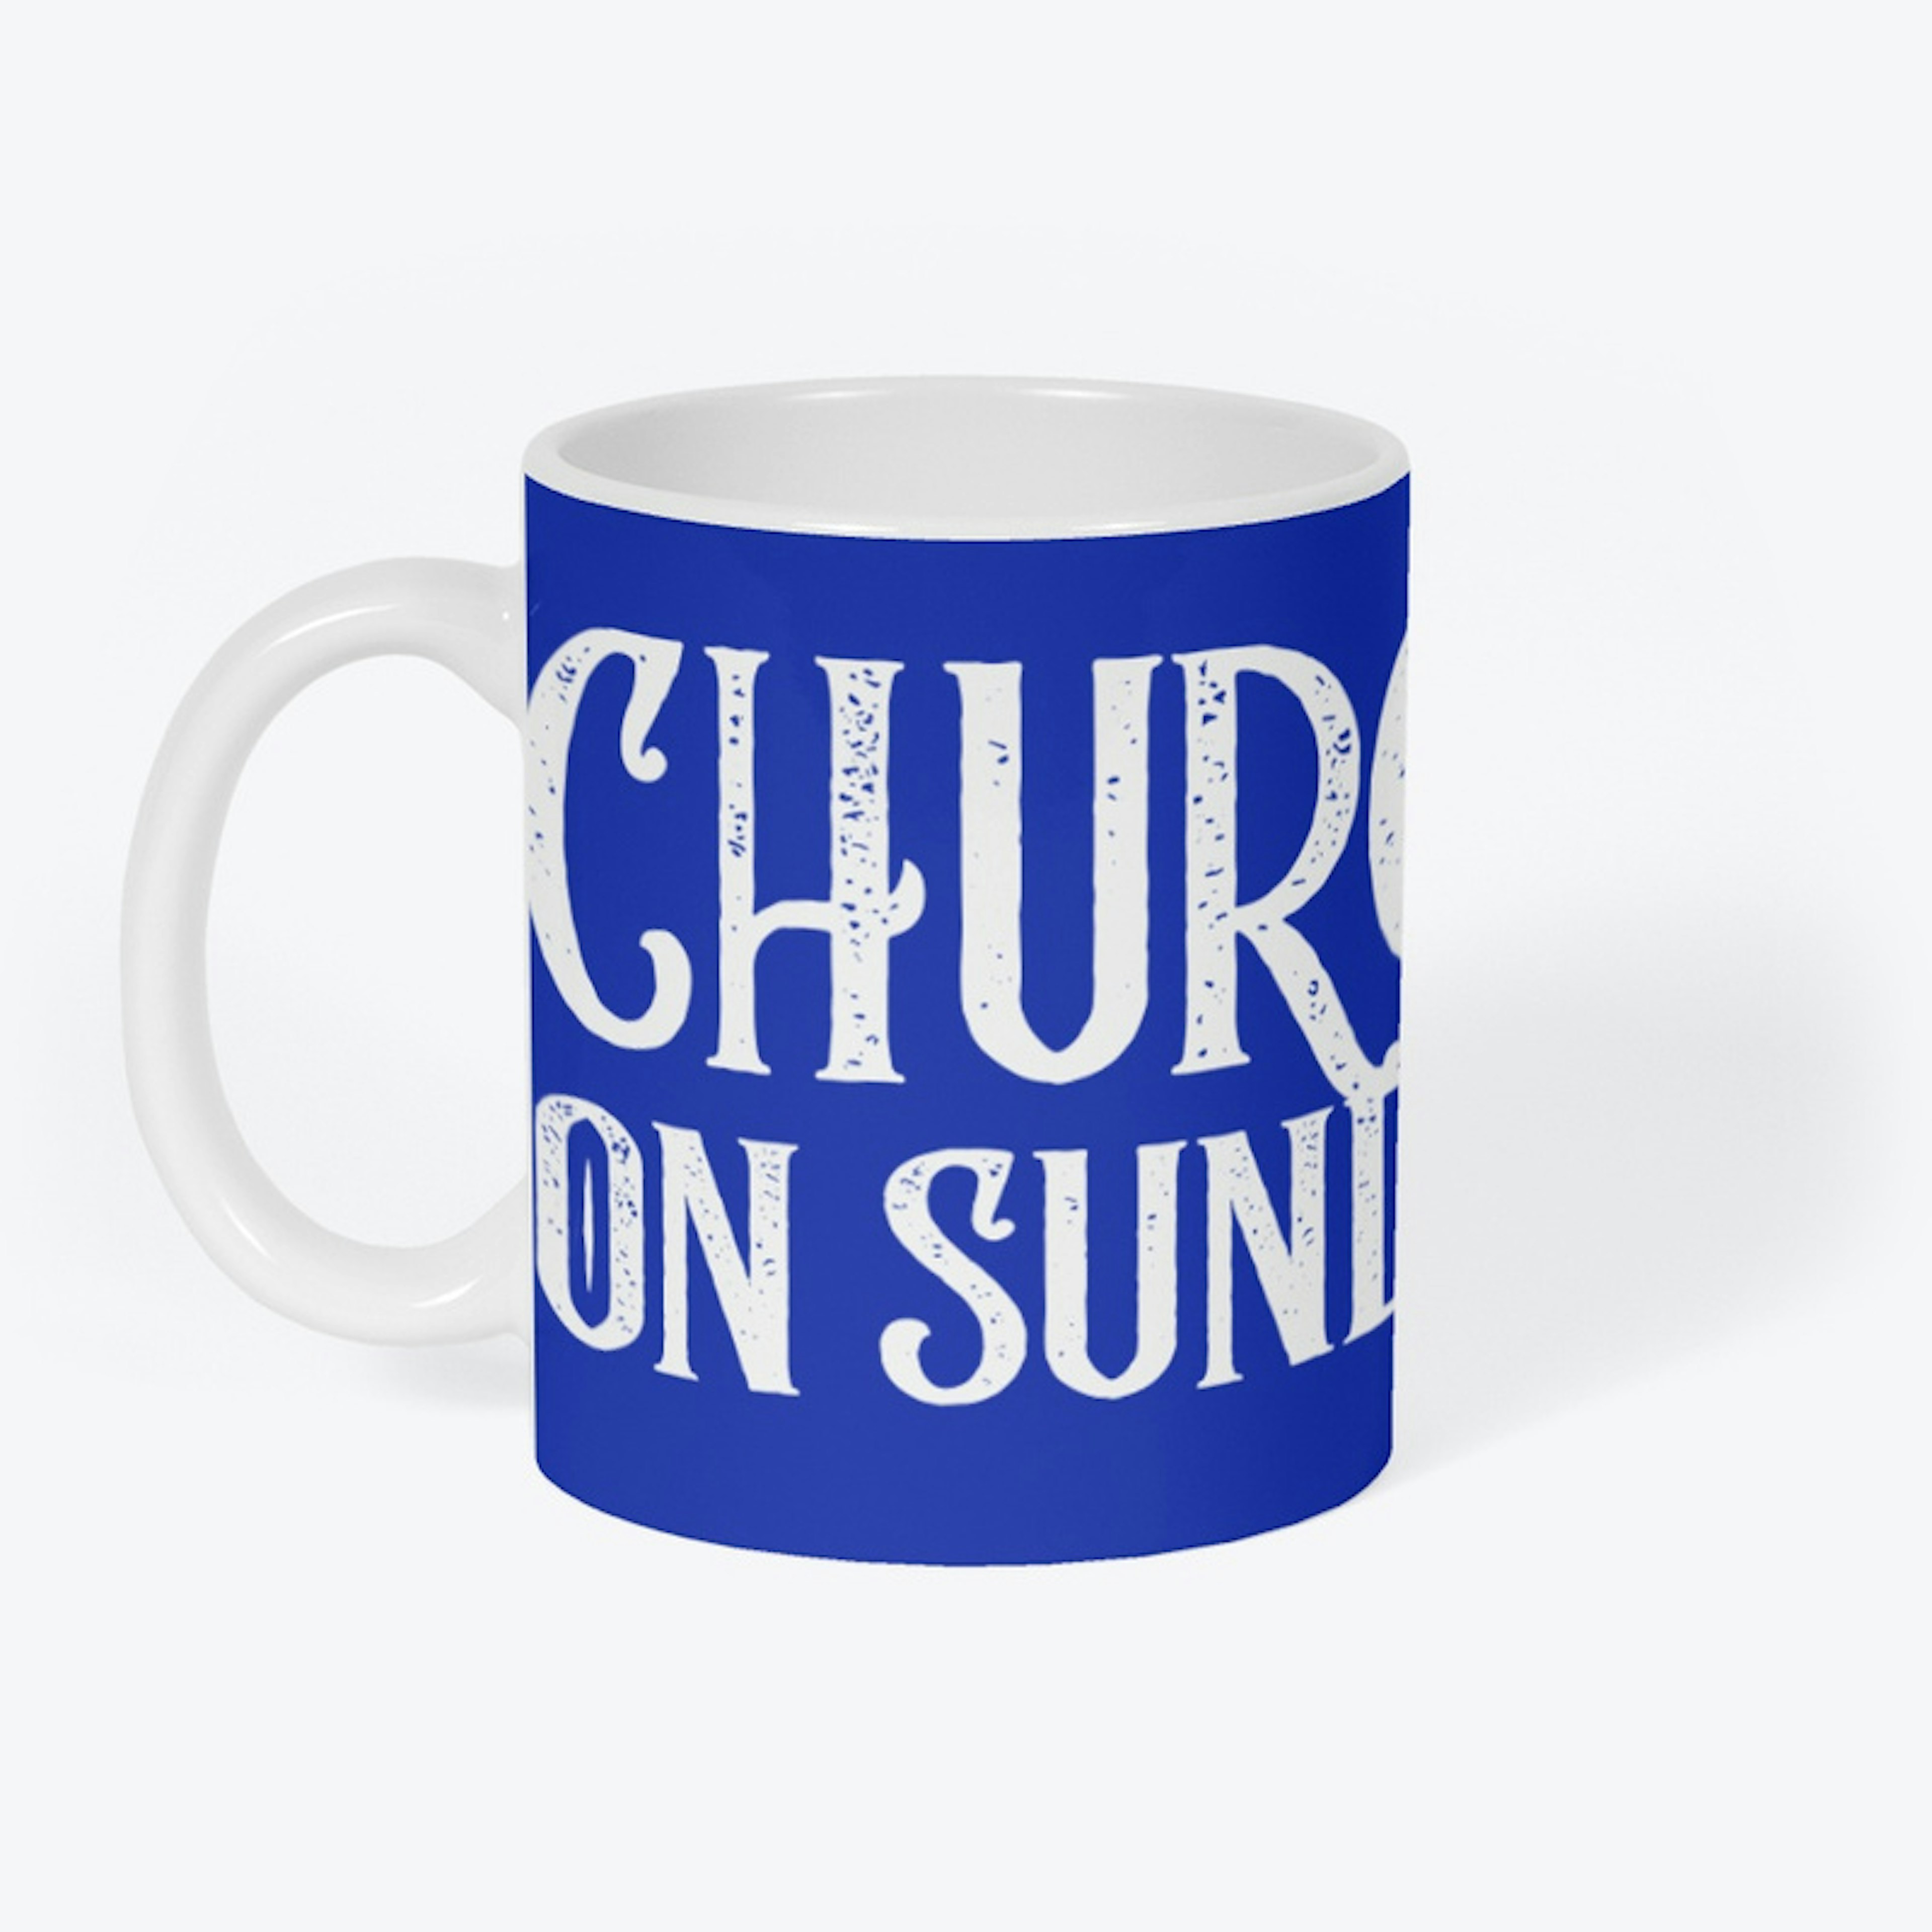 " Church On Sunday " Collection !